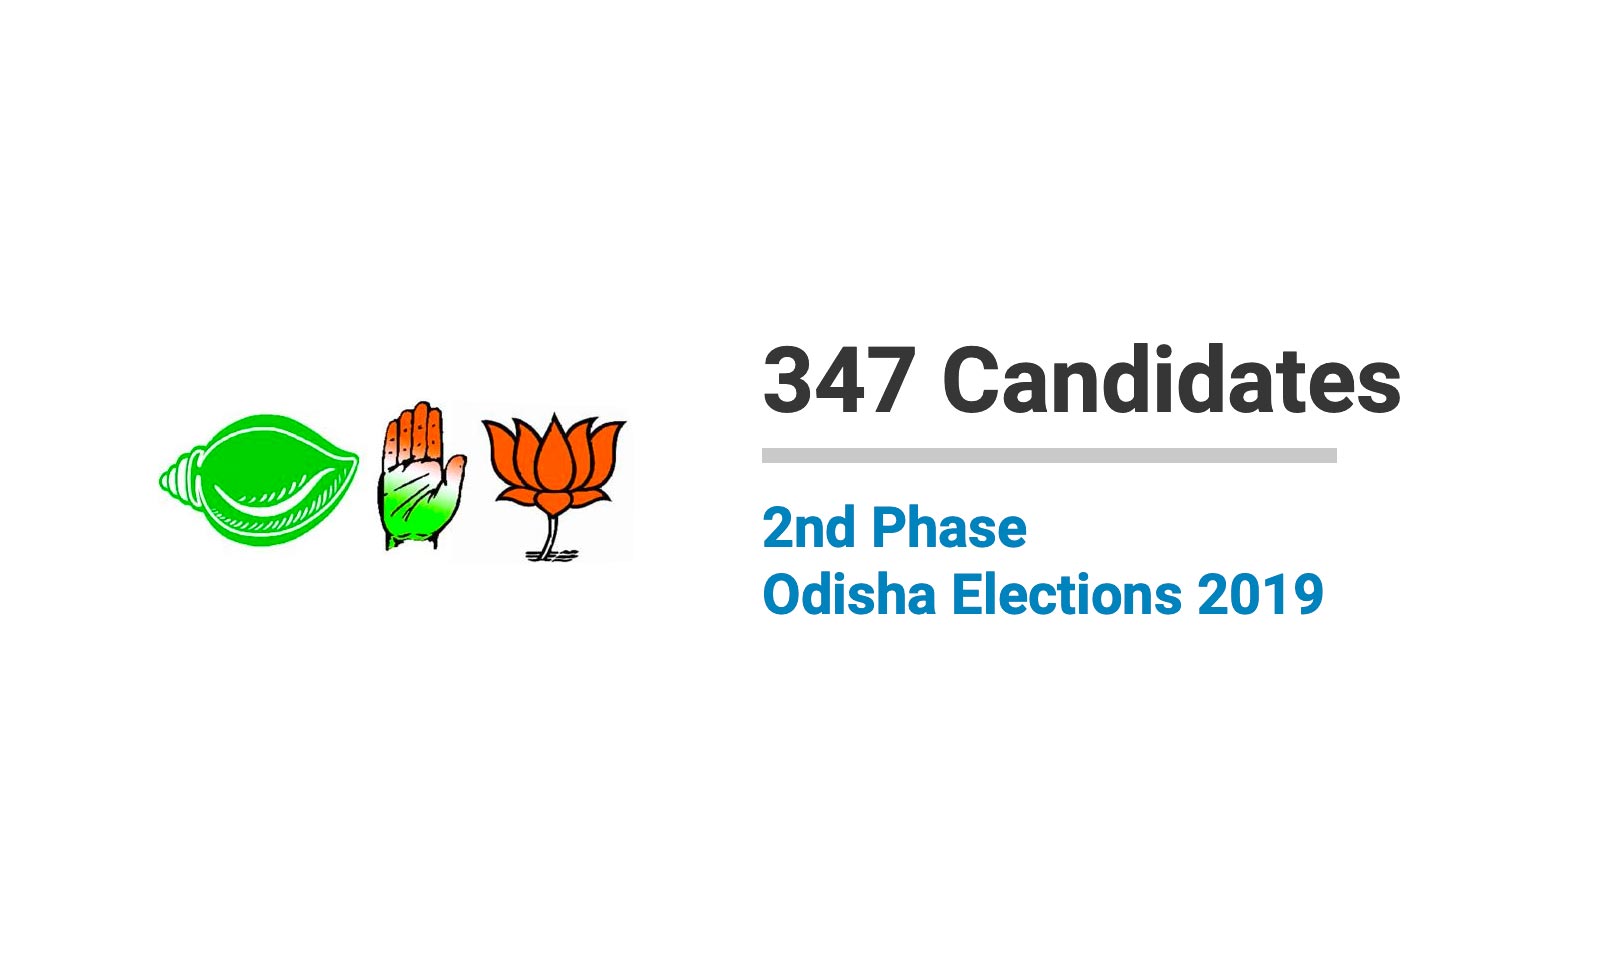 BJD BJP Congress Odisha 2019 Candidates